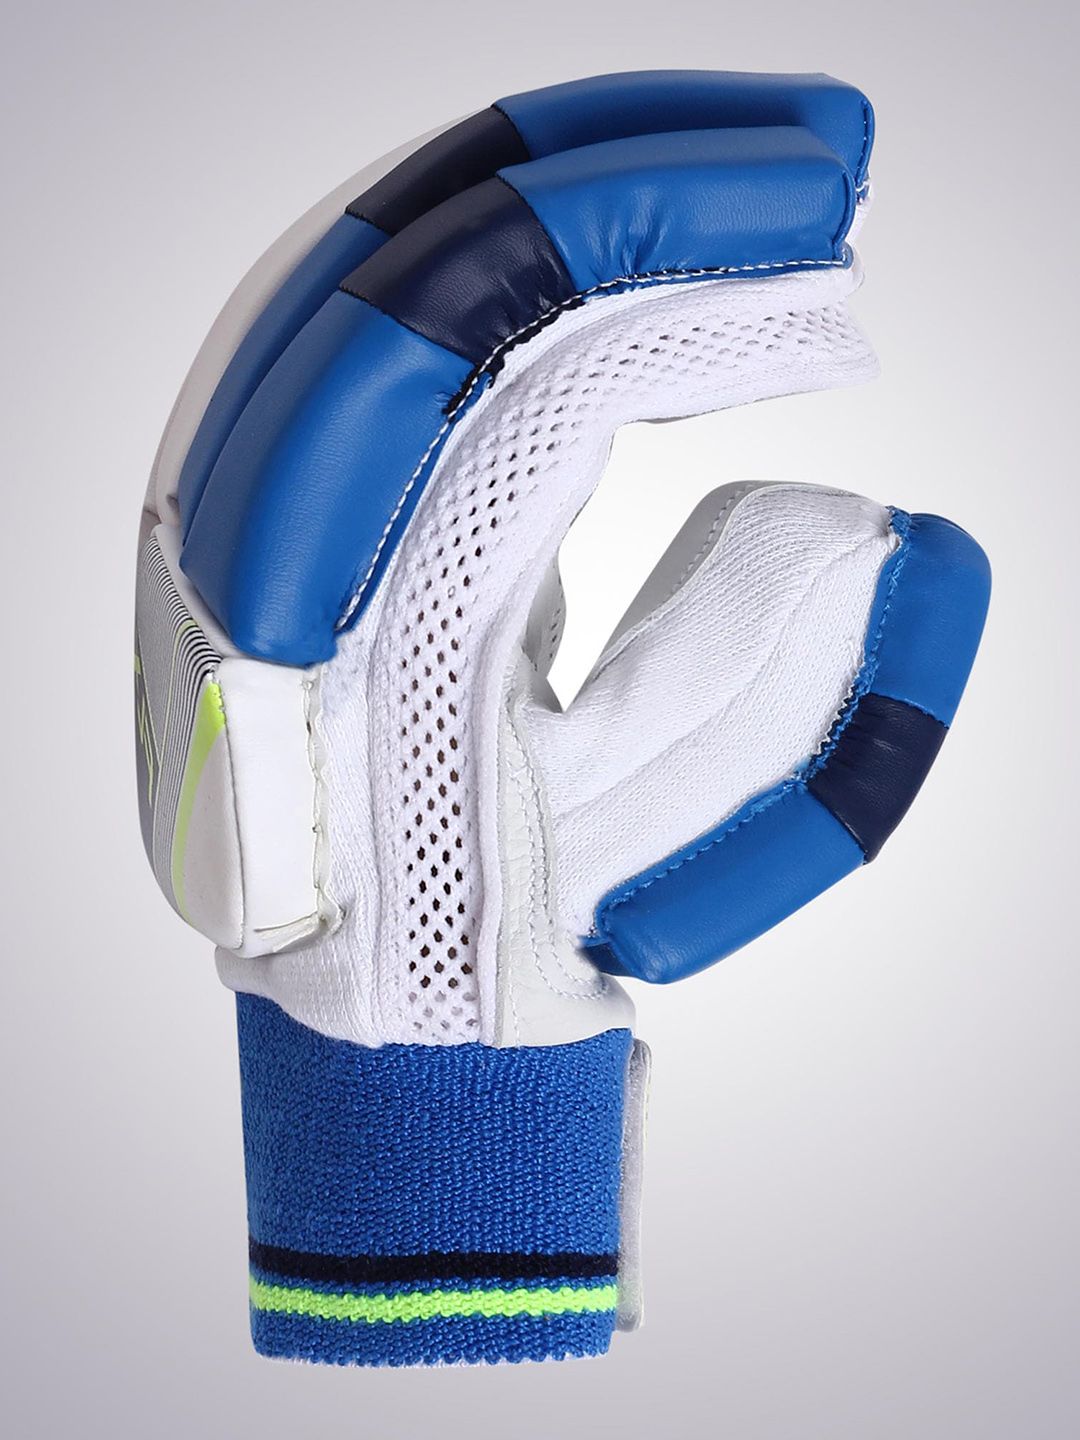 FLX By Decathlon Men White & Blue Colourblocked Latex Cricket Batting Gloves Price in India